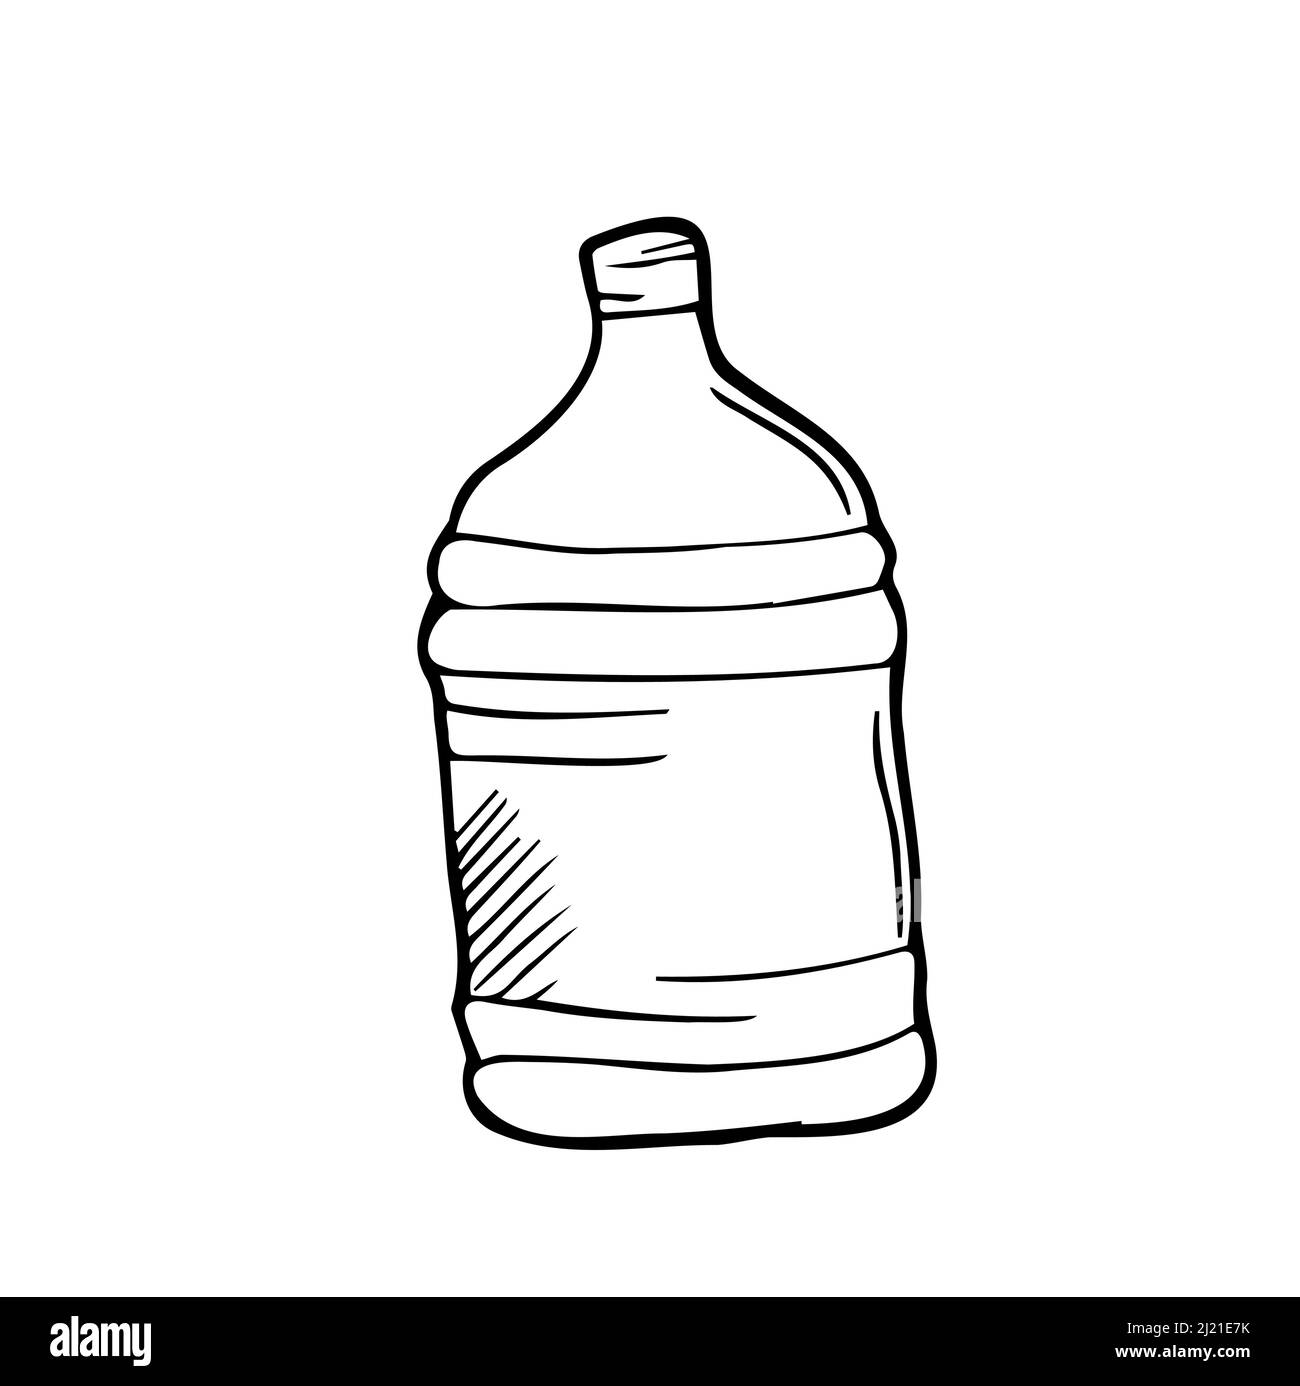 https://c8.alamy.com/comp/2J21E7K/doodle-icon-big-large-plastic-water-bottle-canister-5-litres-black-and-white-clip-art-single-container-pictogram-2J21E7K.jpg